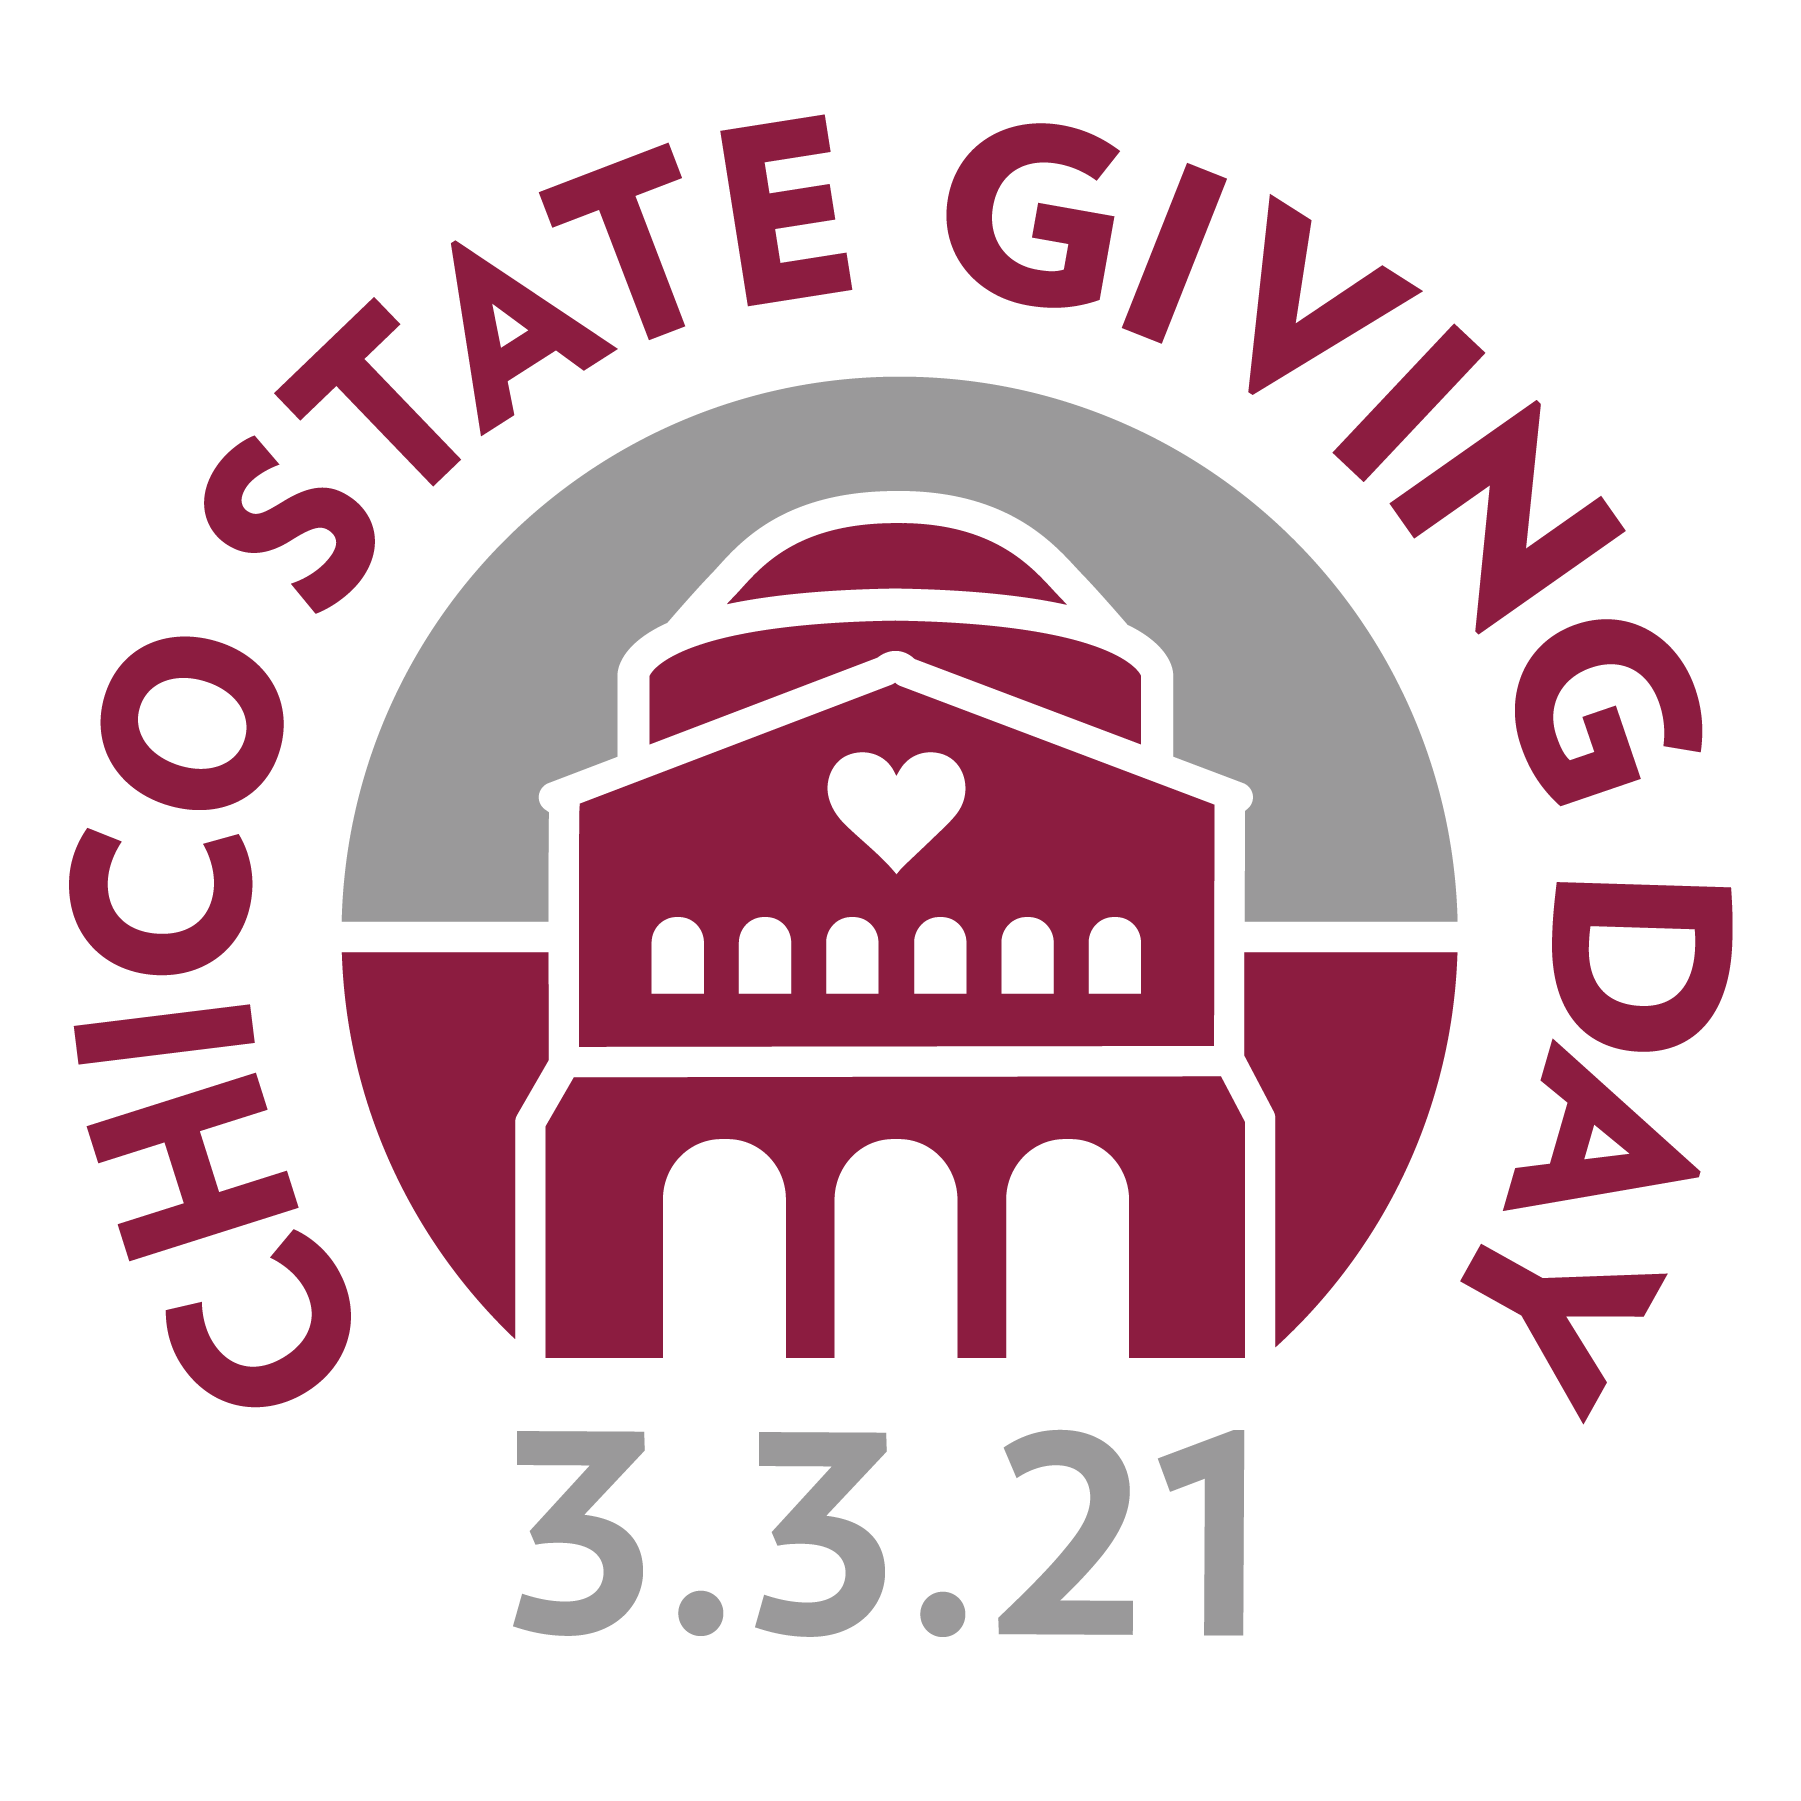 Giving Day logo